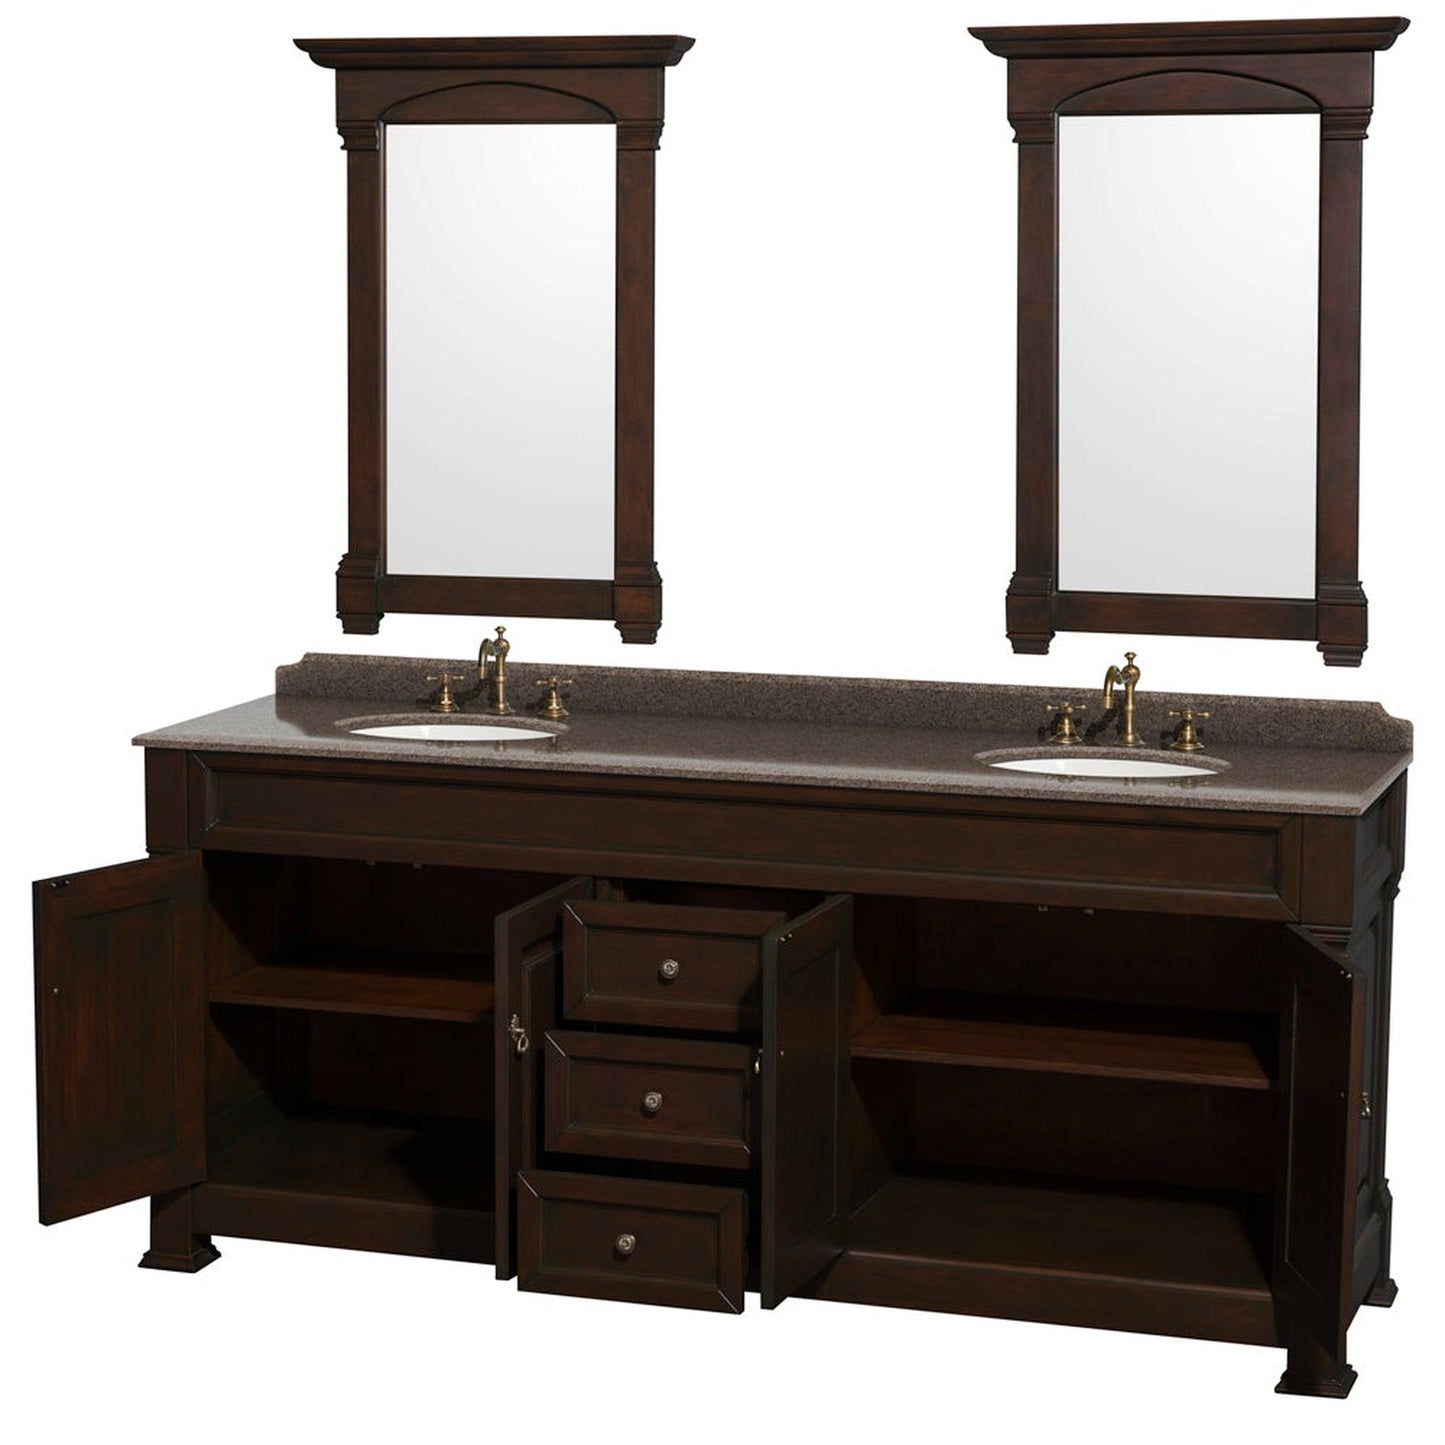 Wyndham Collection Andover 80" Double Bathroom Vanity in Dark Cherry With Imperial Brown Granite Countertop, Undermount Oval Sink & 28" Mirror